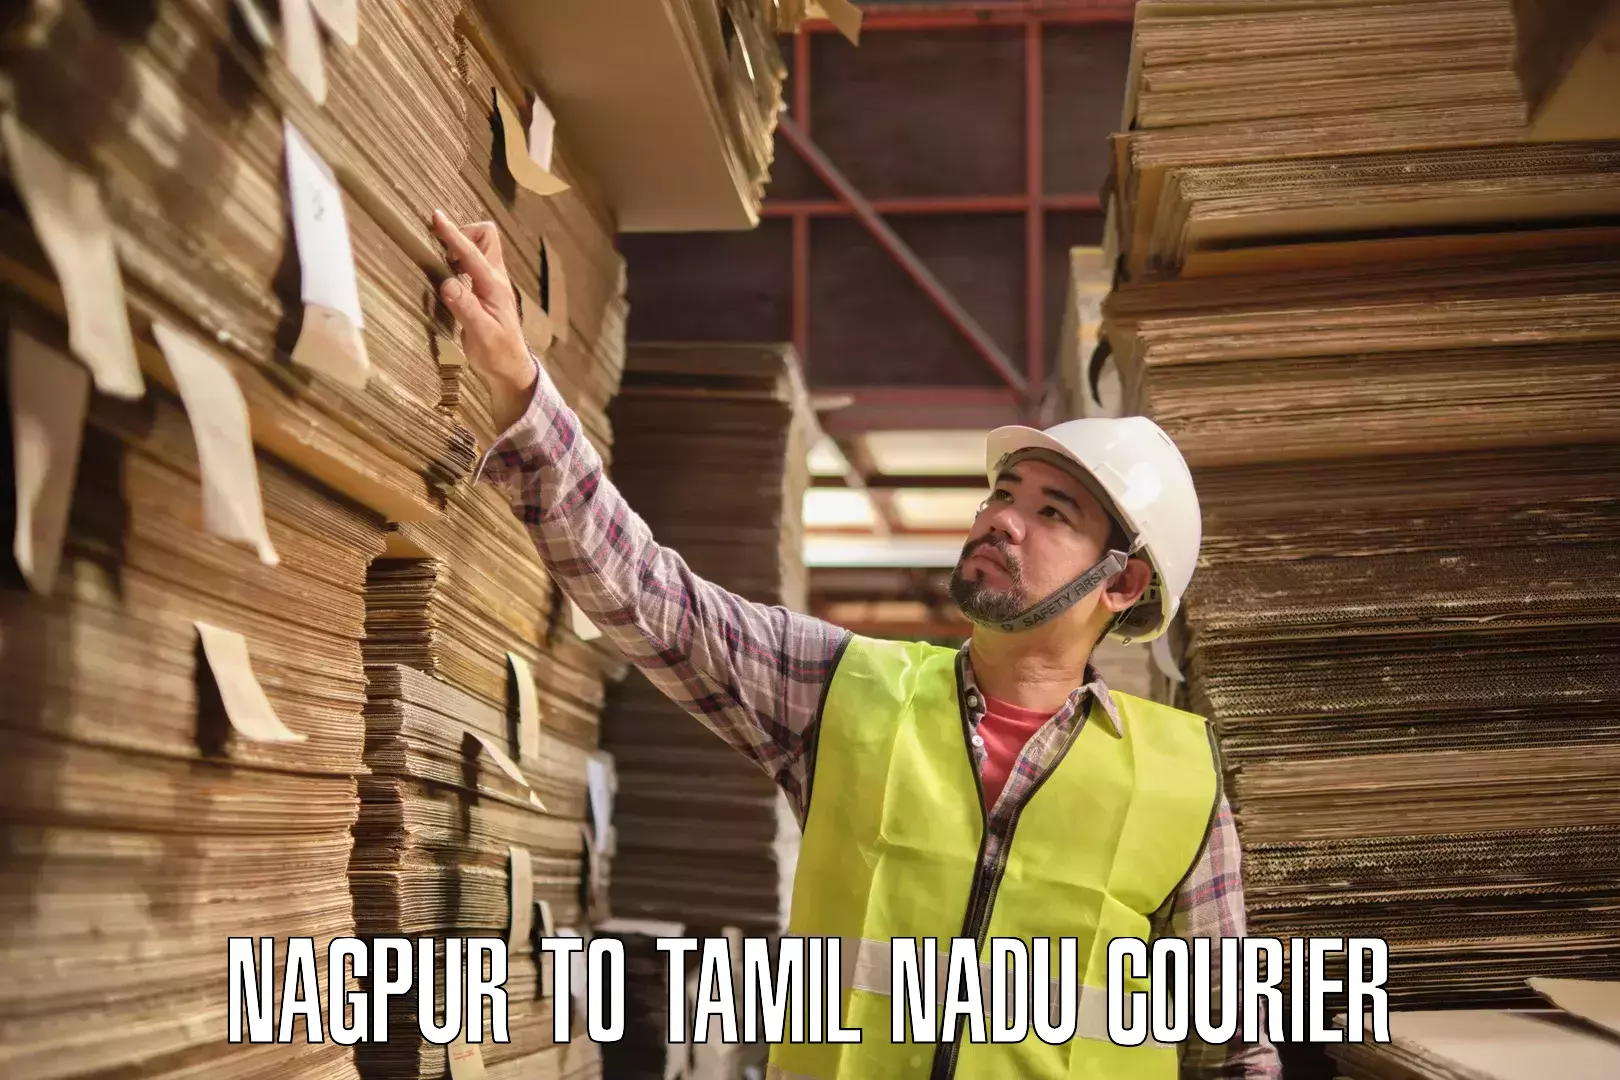 Professional courier handling Nagpur to Chennai Port